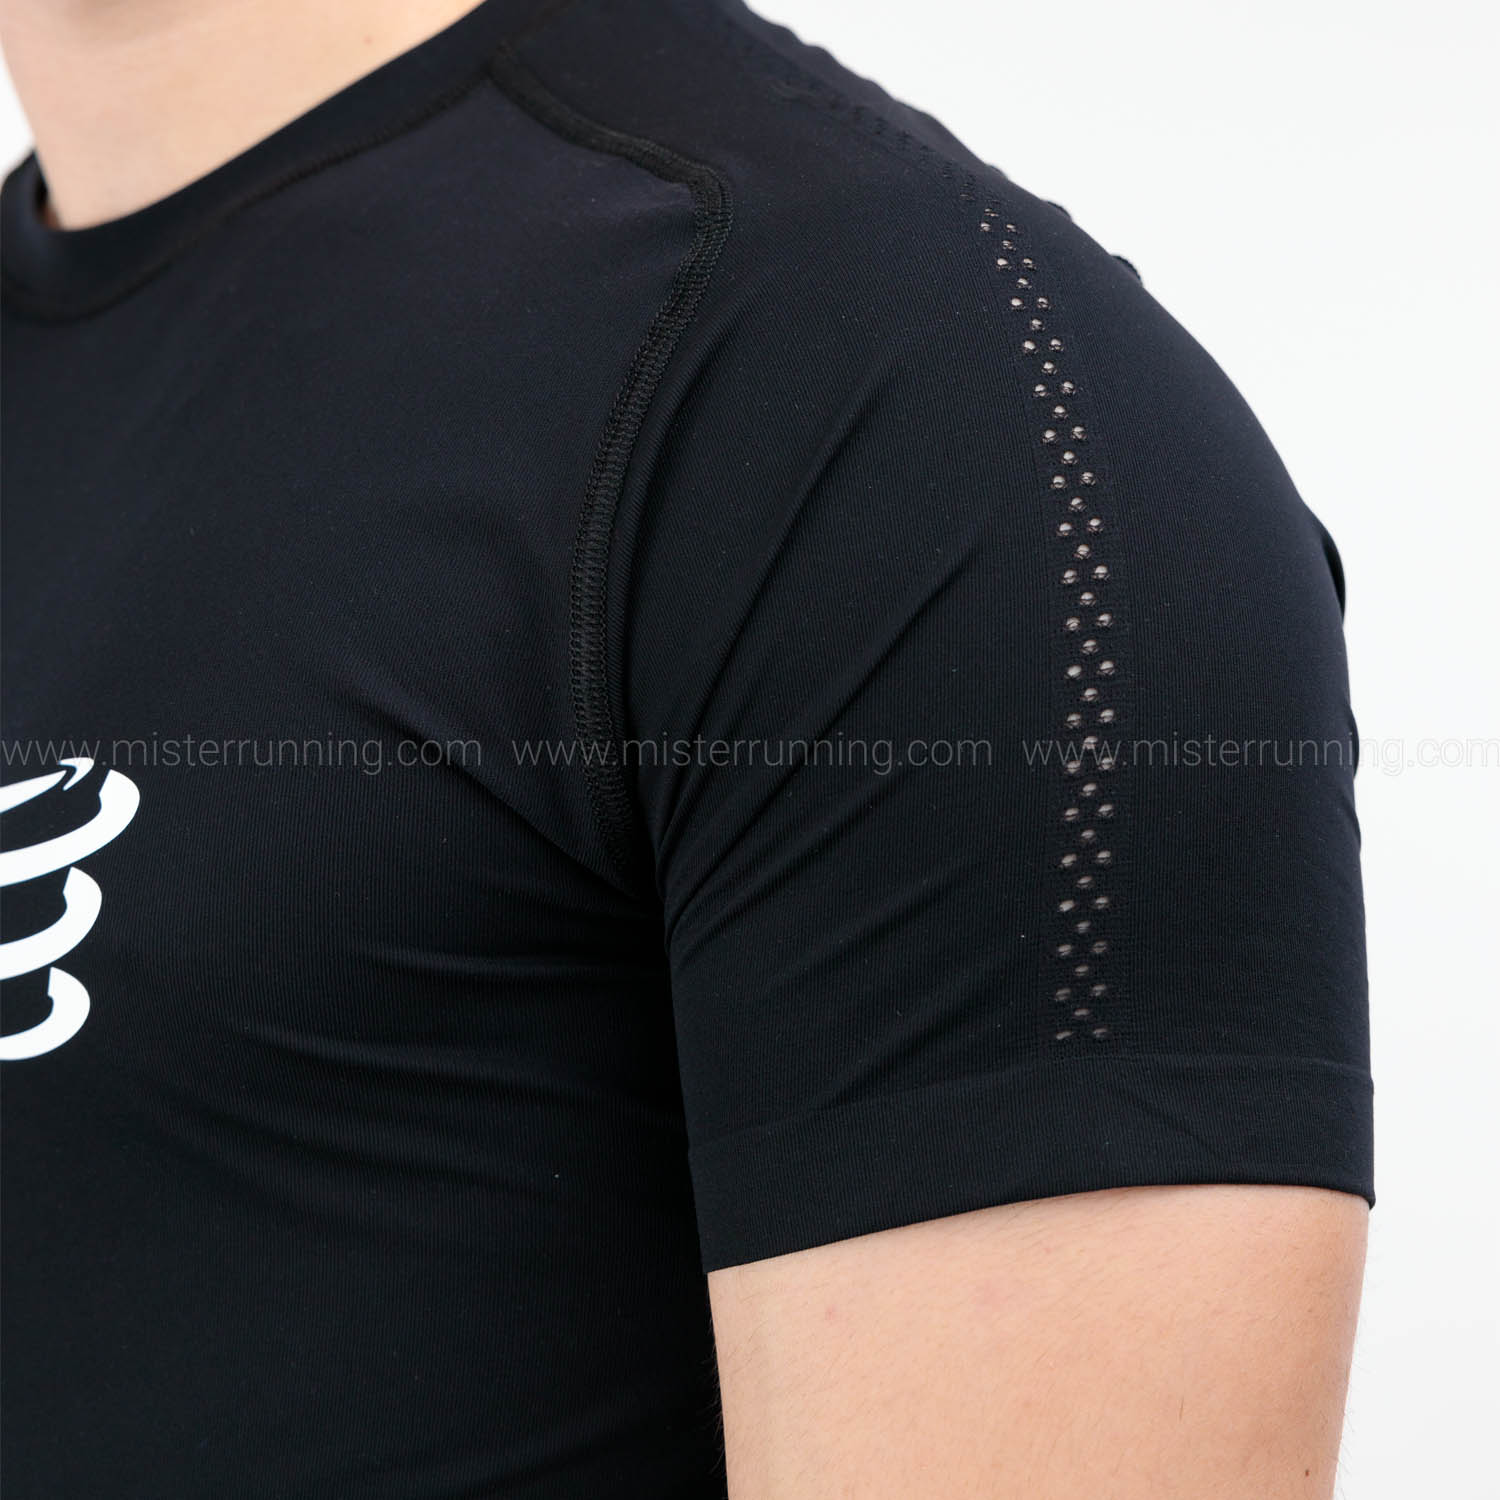 Compressport Performance Camiseta - Black/White